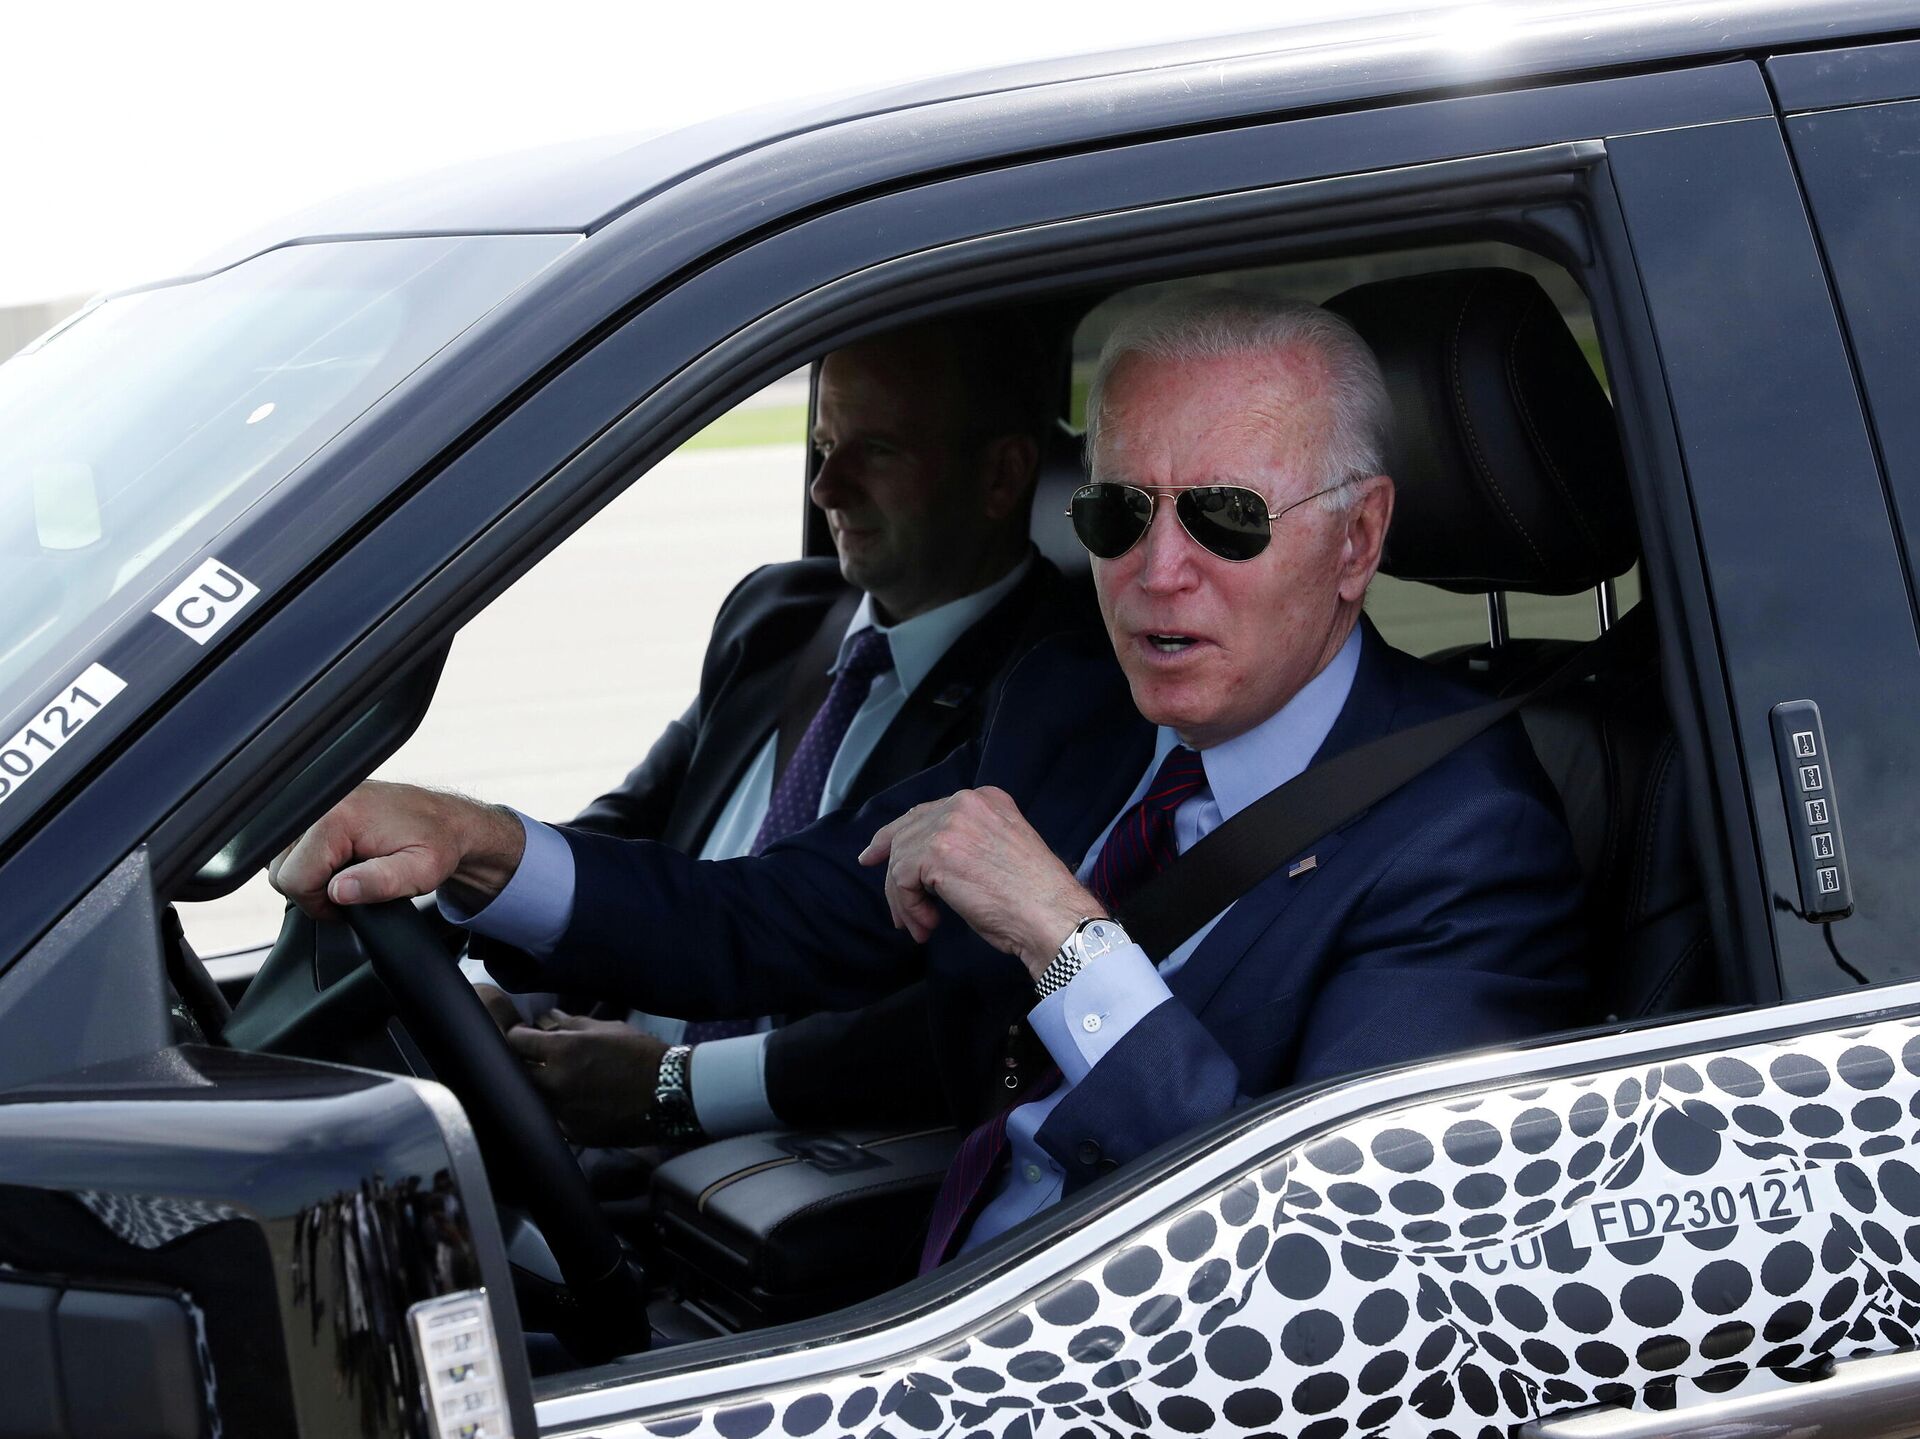 Байдн. Автомобиль президента США Джо Байдена. Джо Байден за рулем. Байден на Ford. Кортеж Джо Байдена.